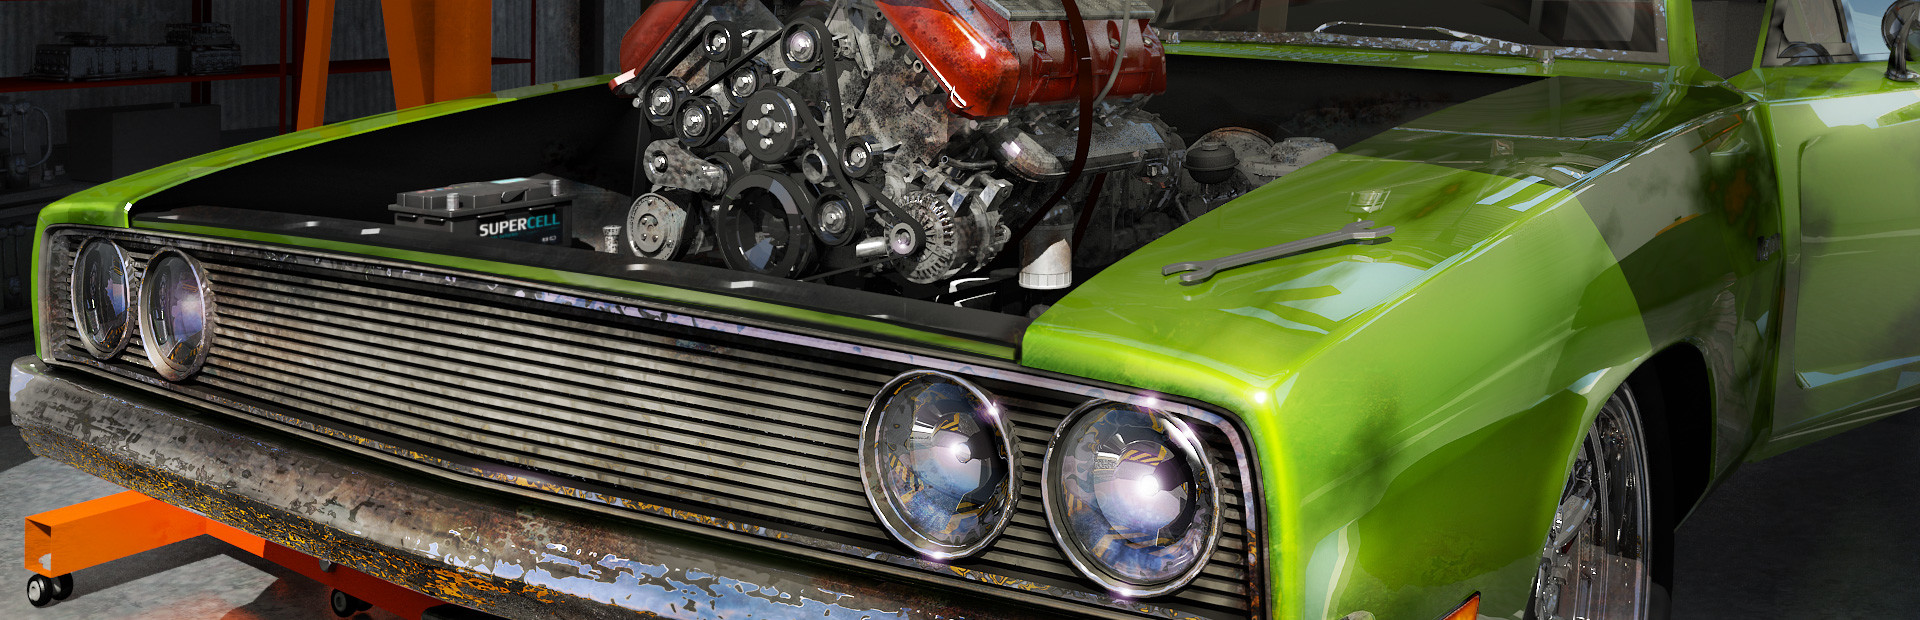 Car Mechanic Simulator 2015 cover image